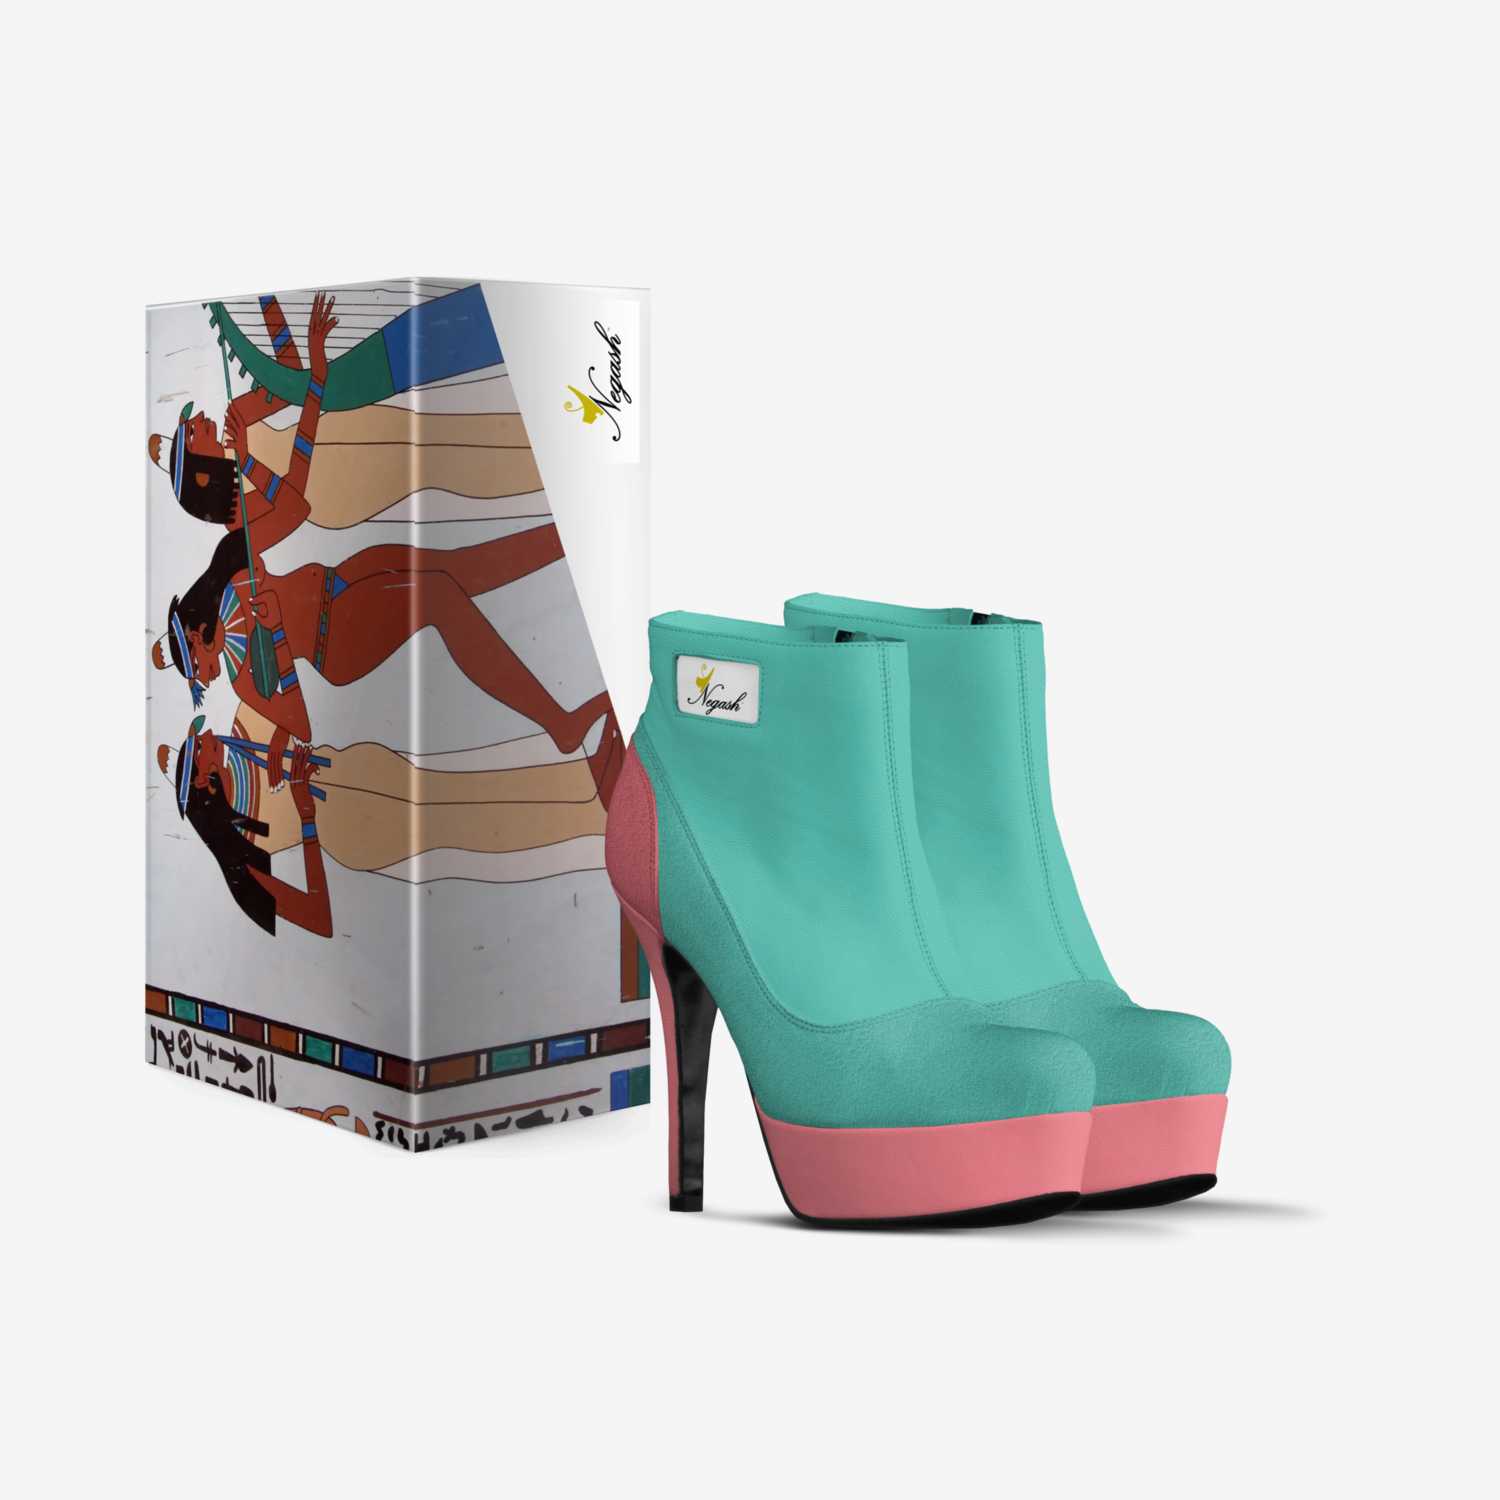 Negash Hathor custom made in Italy shoes by Rocklin Negash | Box view